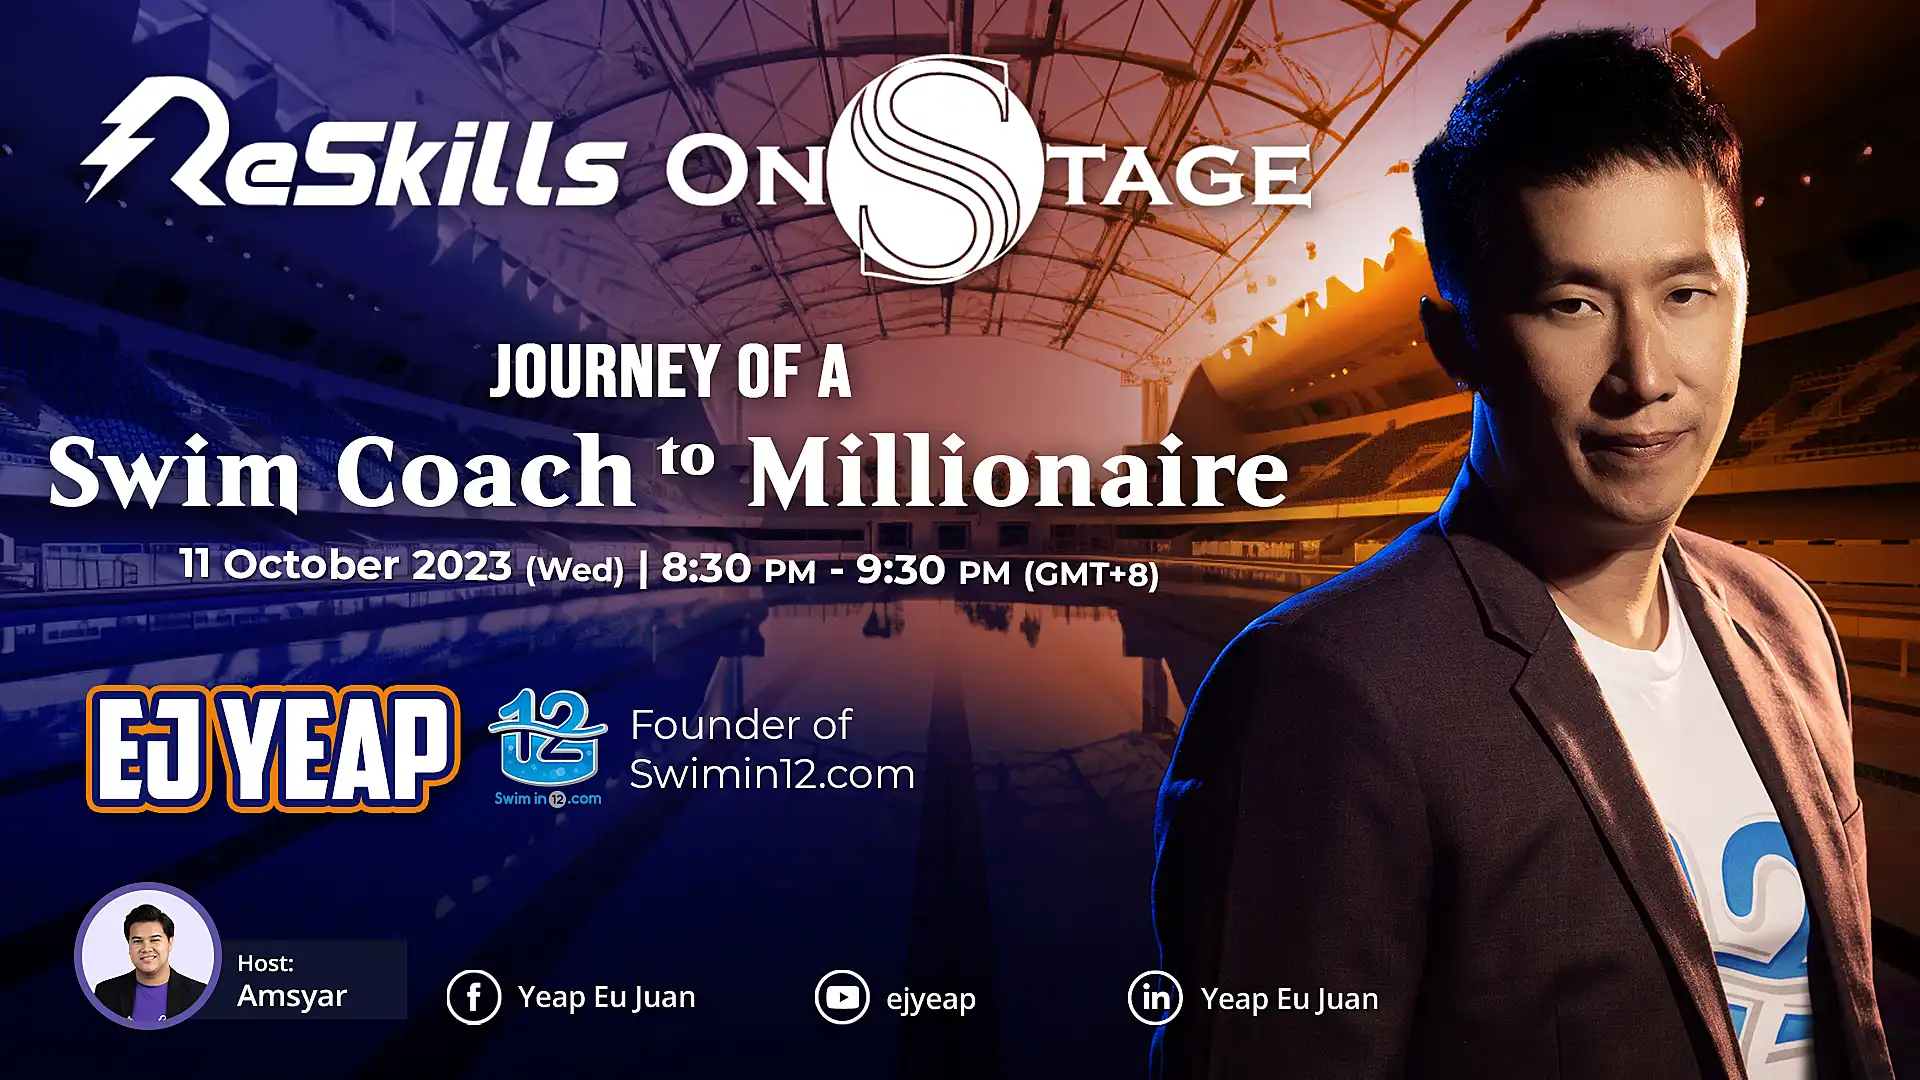 Journey of a Swim Coach to Millionaire